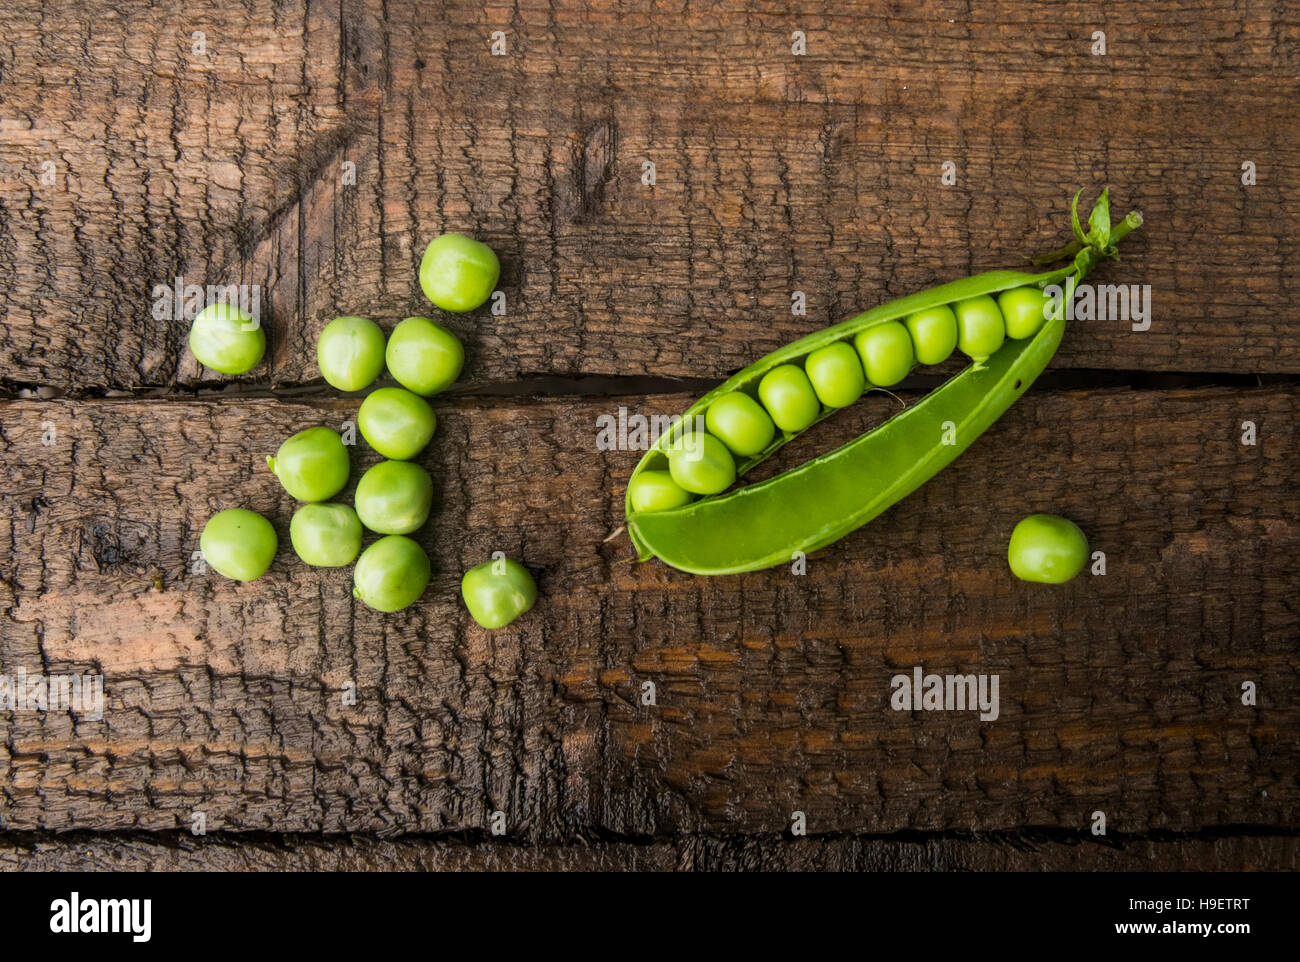 Fresh peas on wooden table Stock Photo